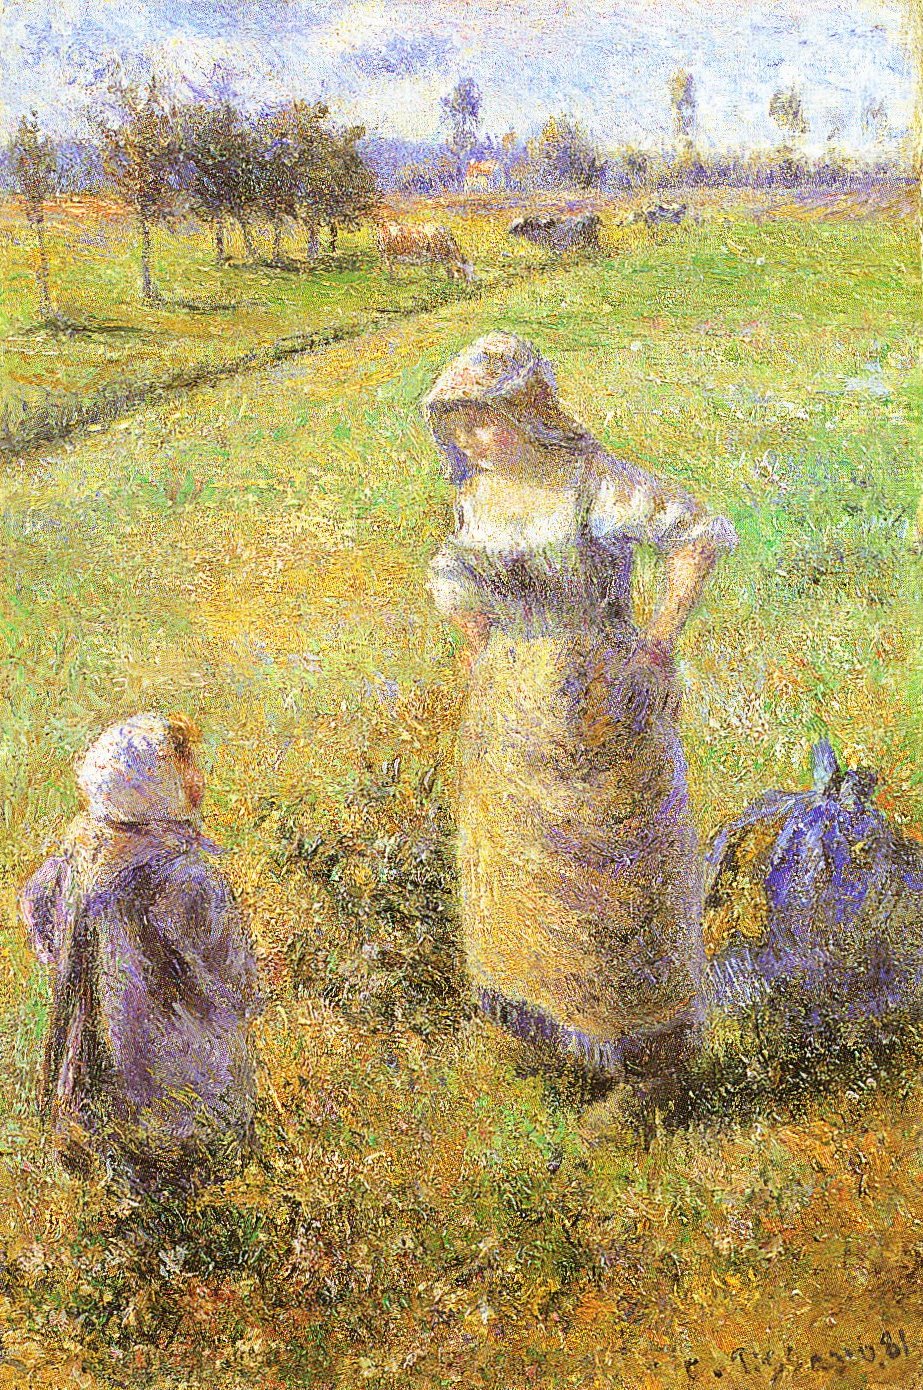 Camille+Pissarro-1830-1903 (329).jpg